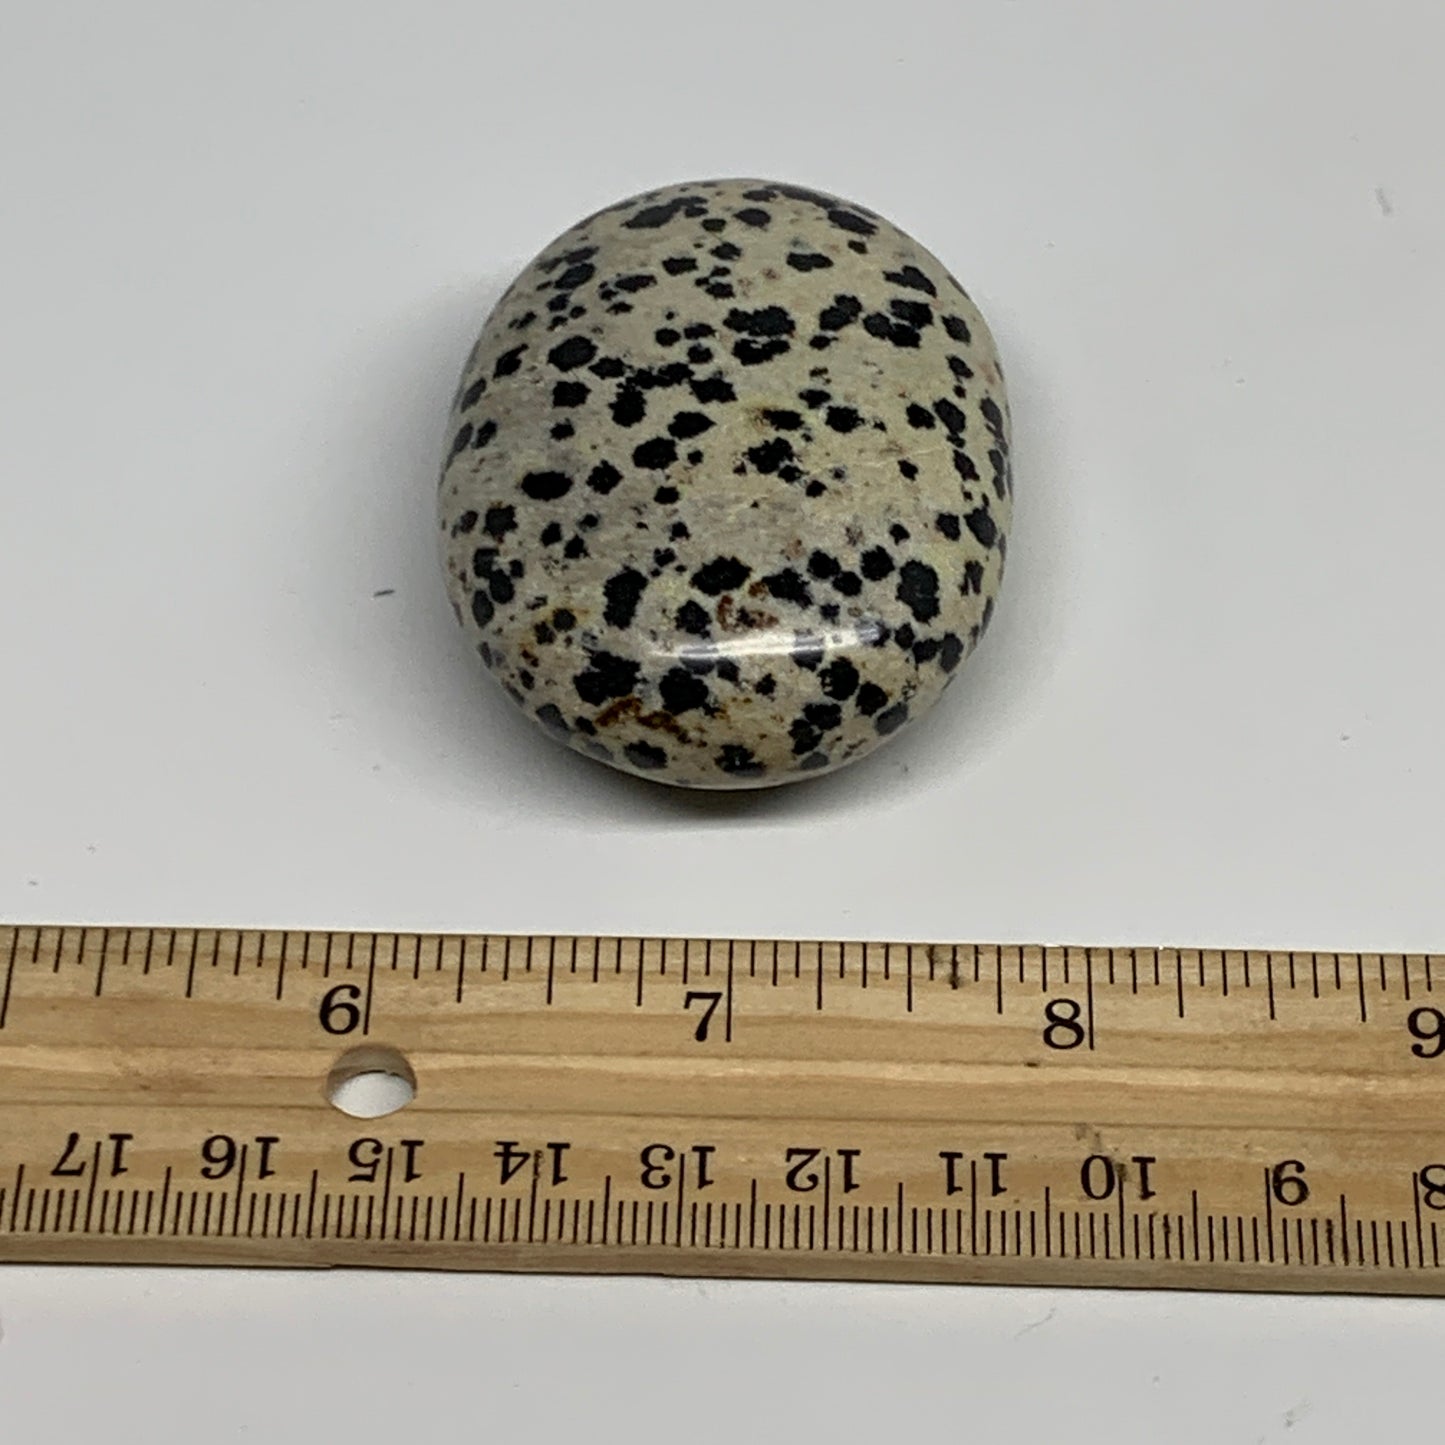 80.1g, 2.2"x1.7"x0.8", Natural Dalmatian Jasper Palm-Stone @India, B29473